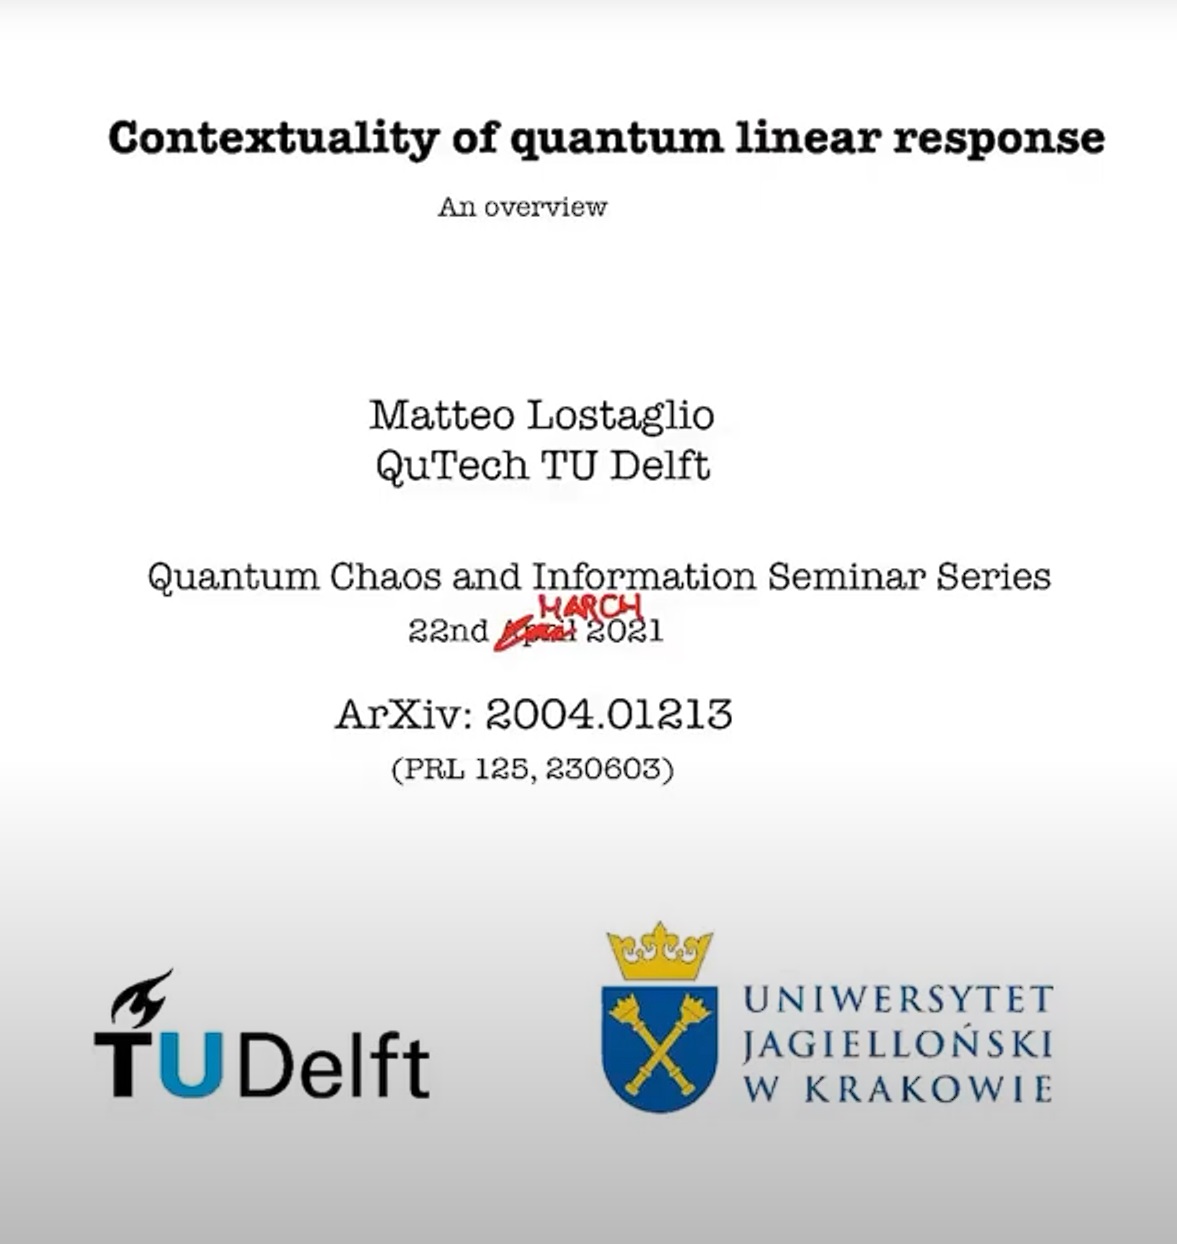 Matteo Lostaglio (QuTech, TU Delf): Certifying quantum signatures in thermodynamics and metrology via contextuality of quantum linear response